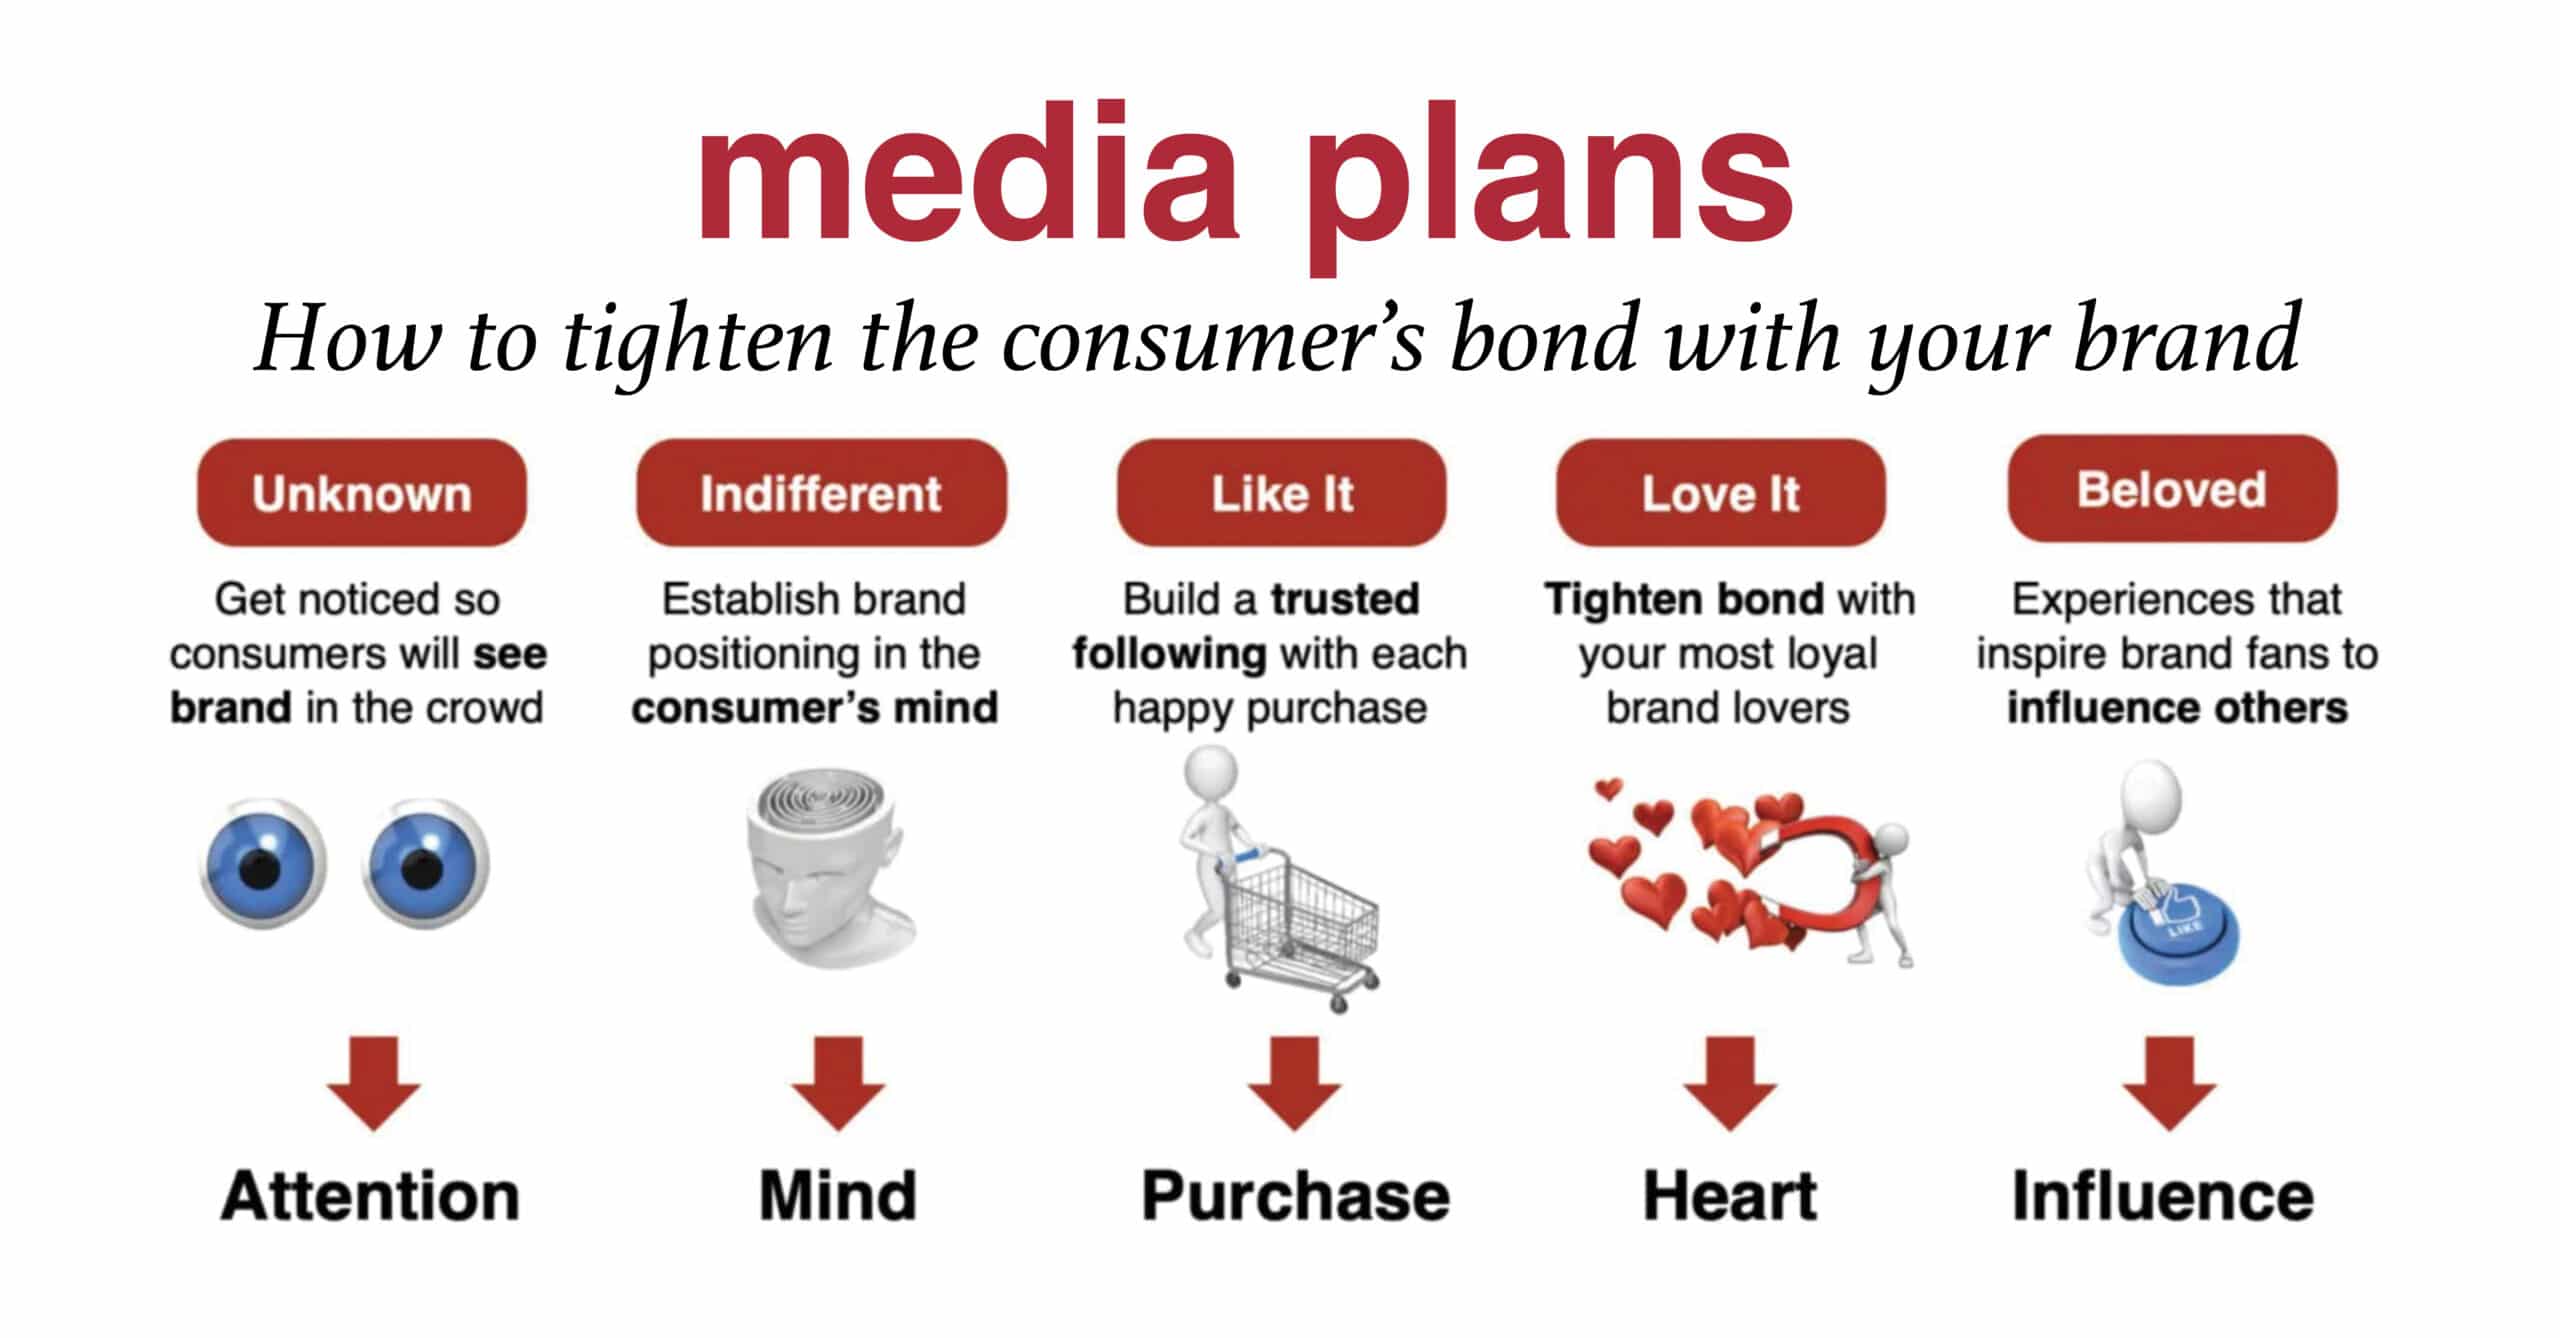 media plans help tighten bond with consumers